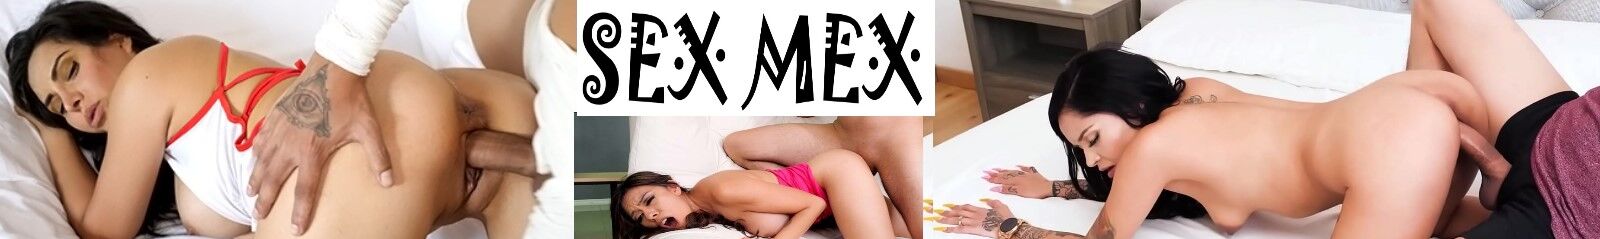 Sex Mex XXX